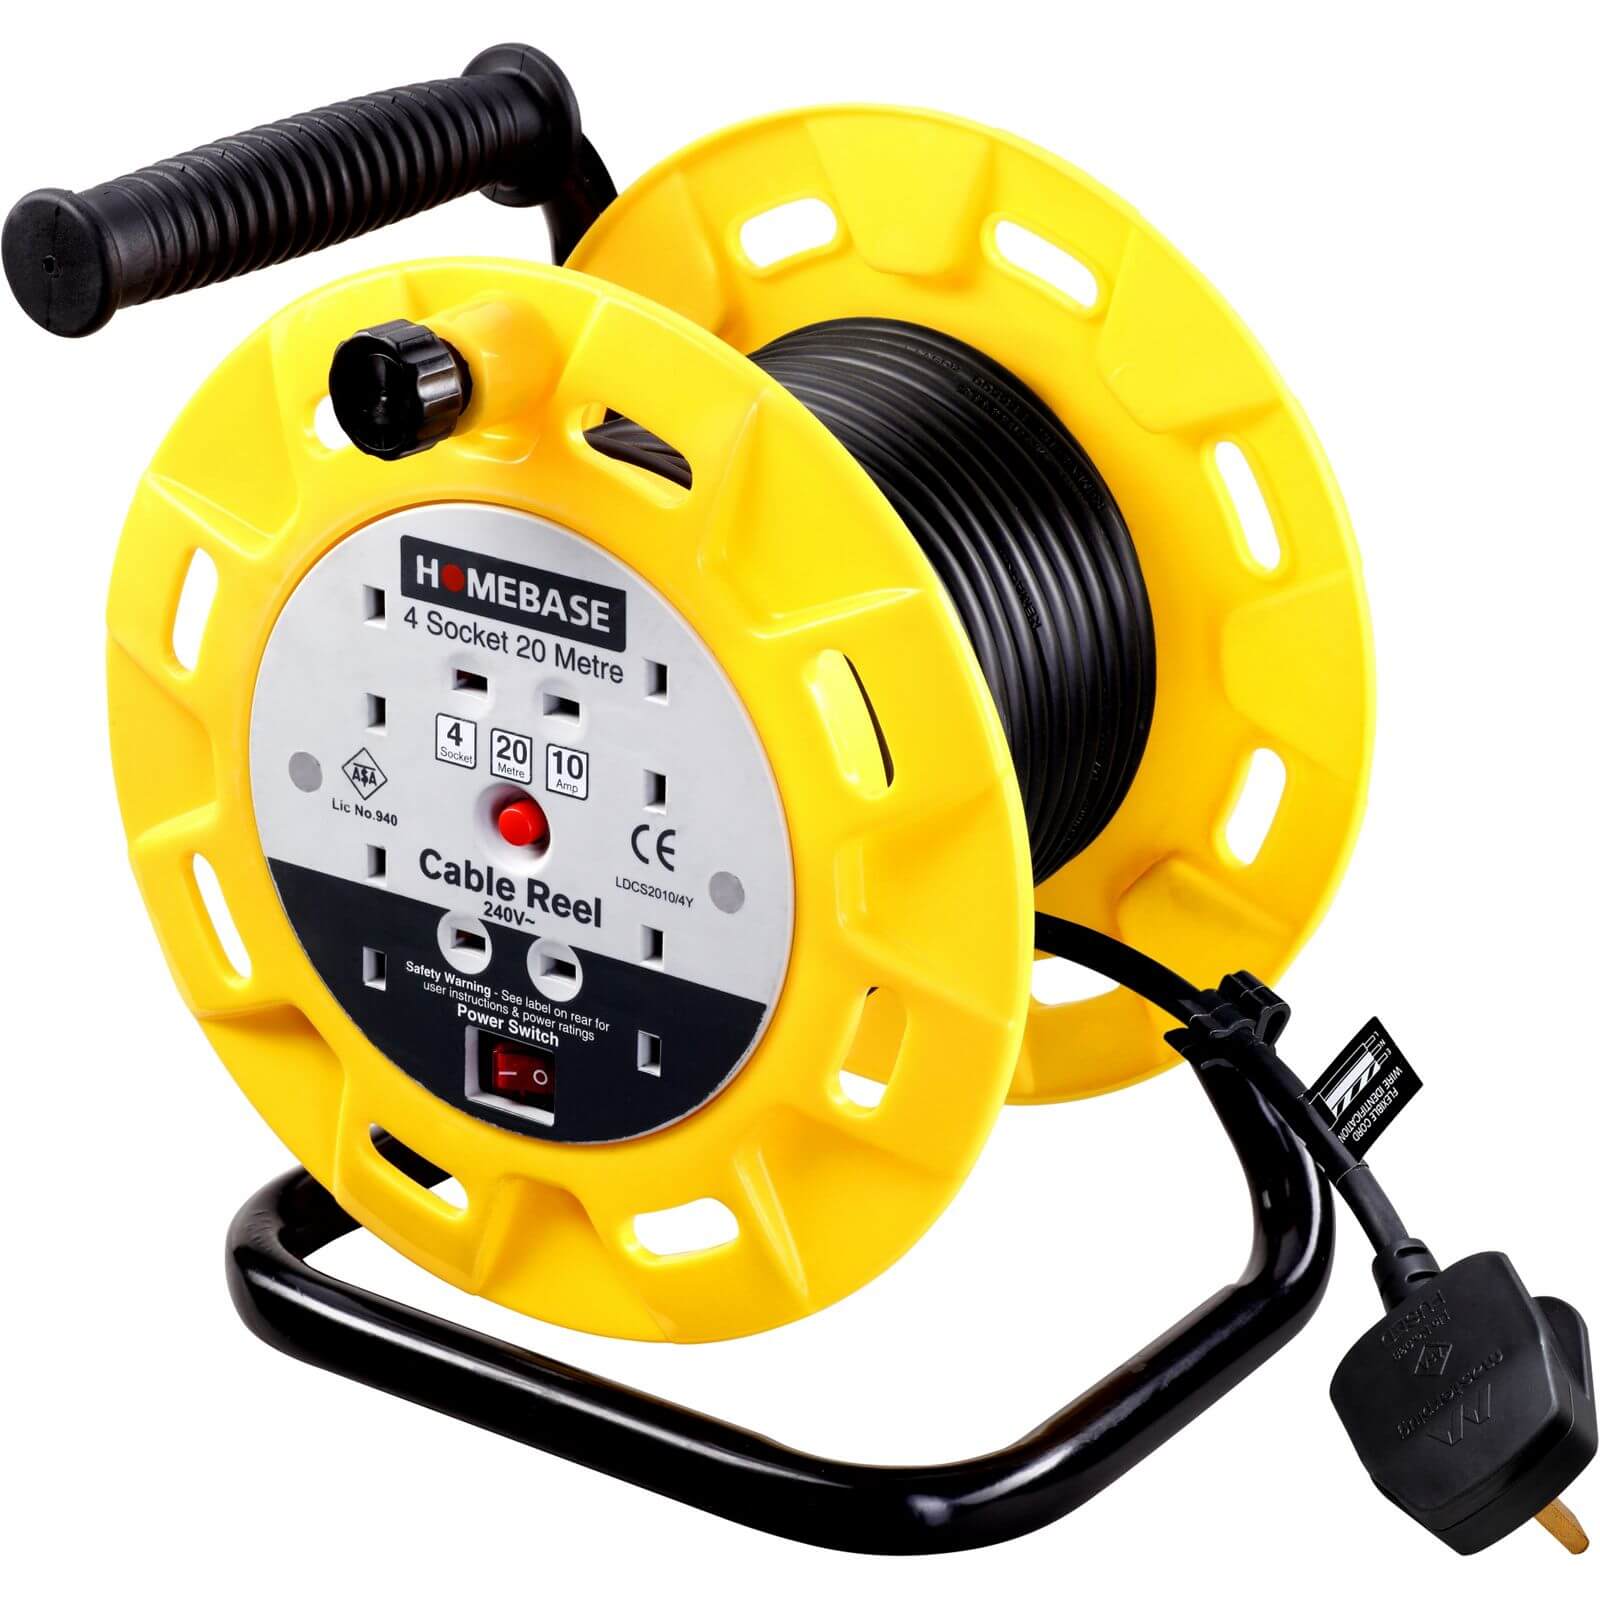 Masterplug 4 Socket Open Drum Cable Reel 20m Yellow/Black